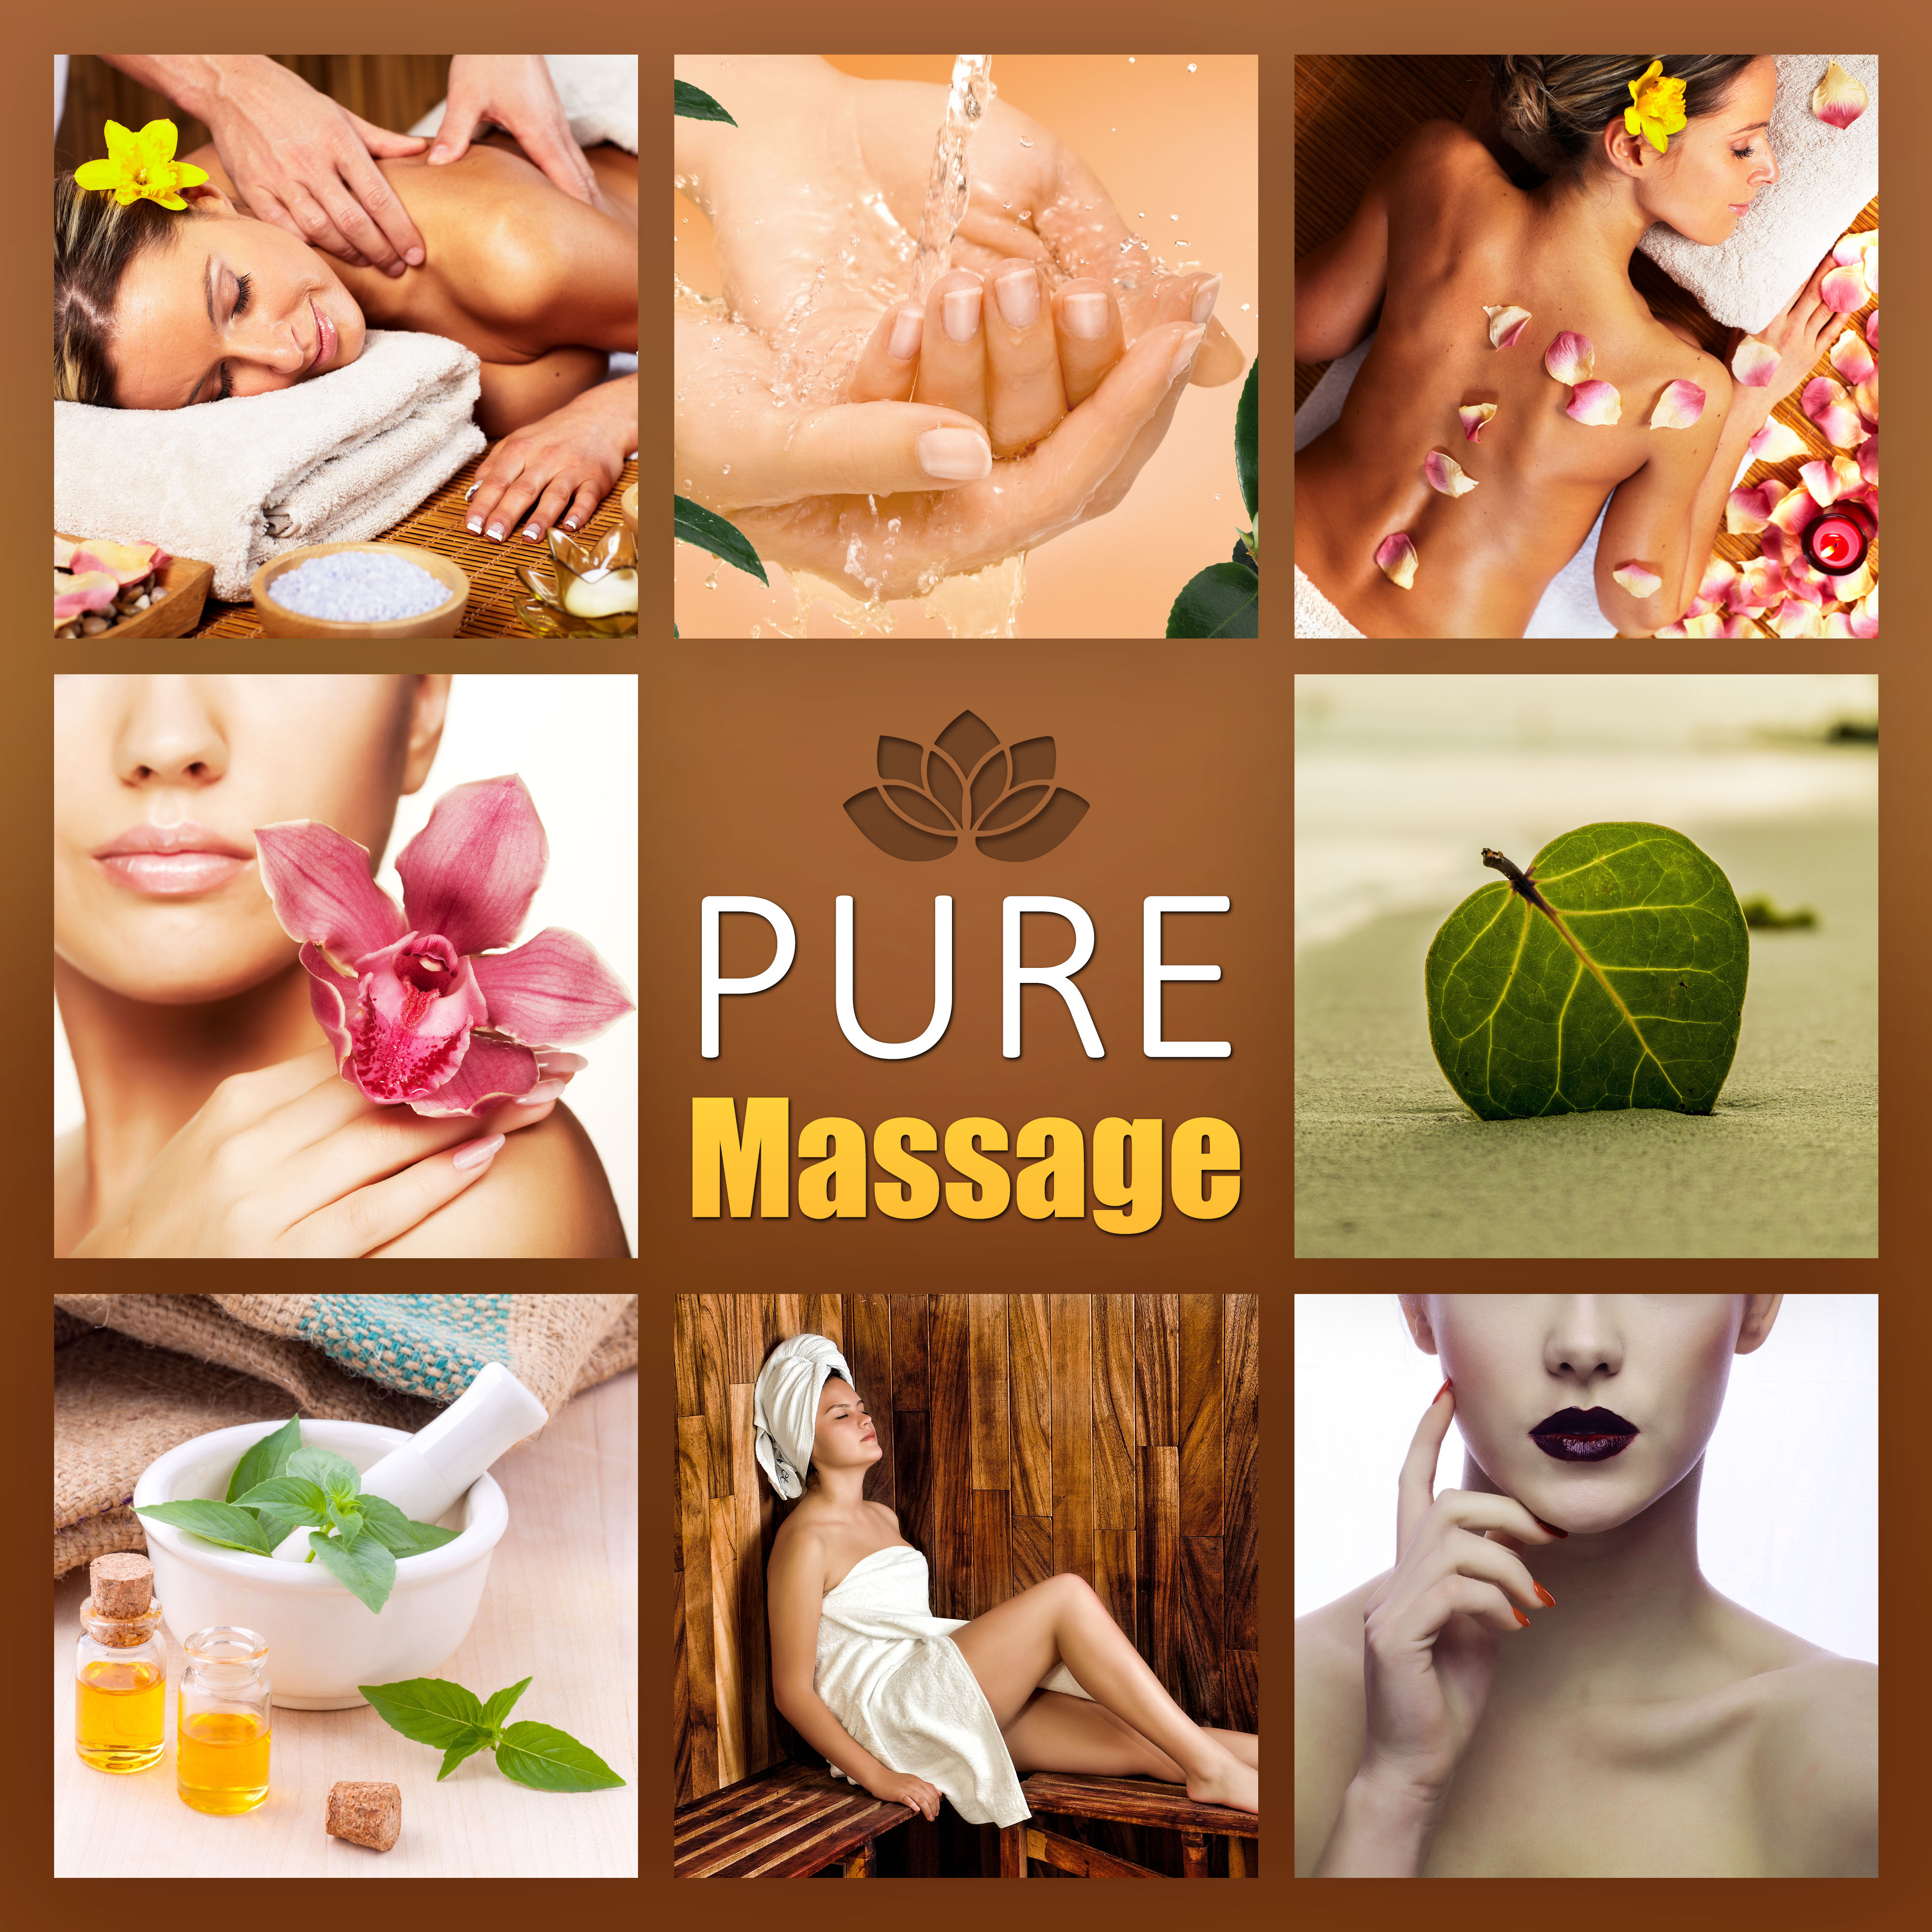 Pure Massage – Most Relaxation Music for Classic Massage, Hot Stone Massage, Spa Treatments, Yoga Meditation, Nature Sounds